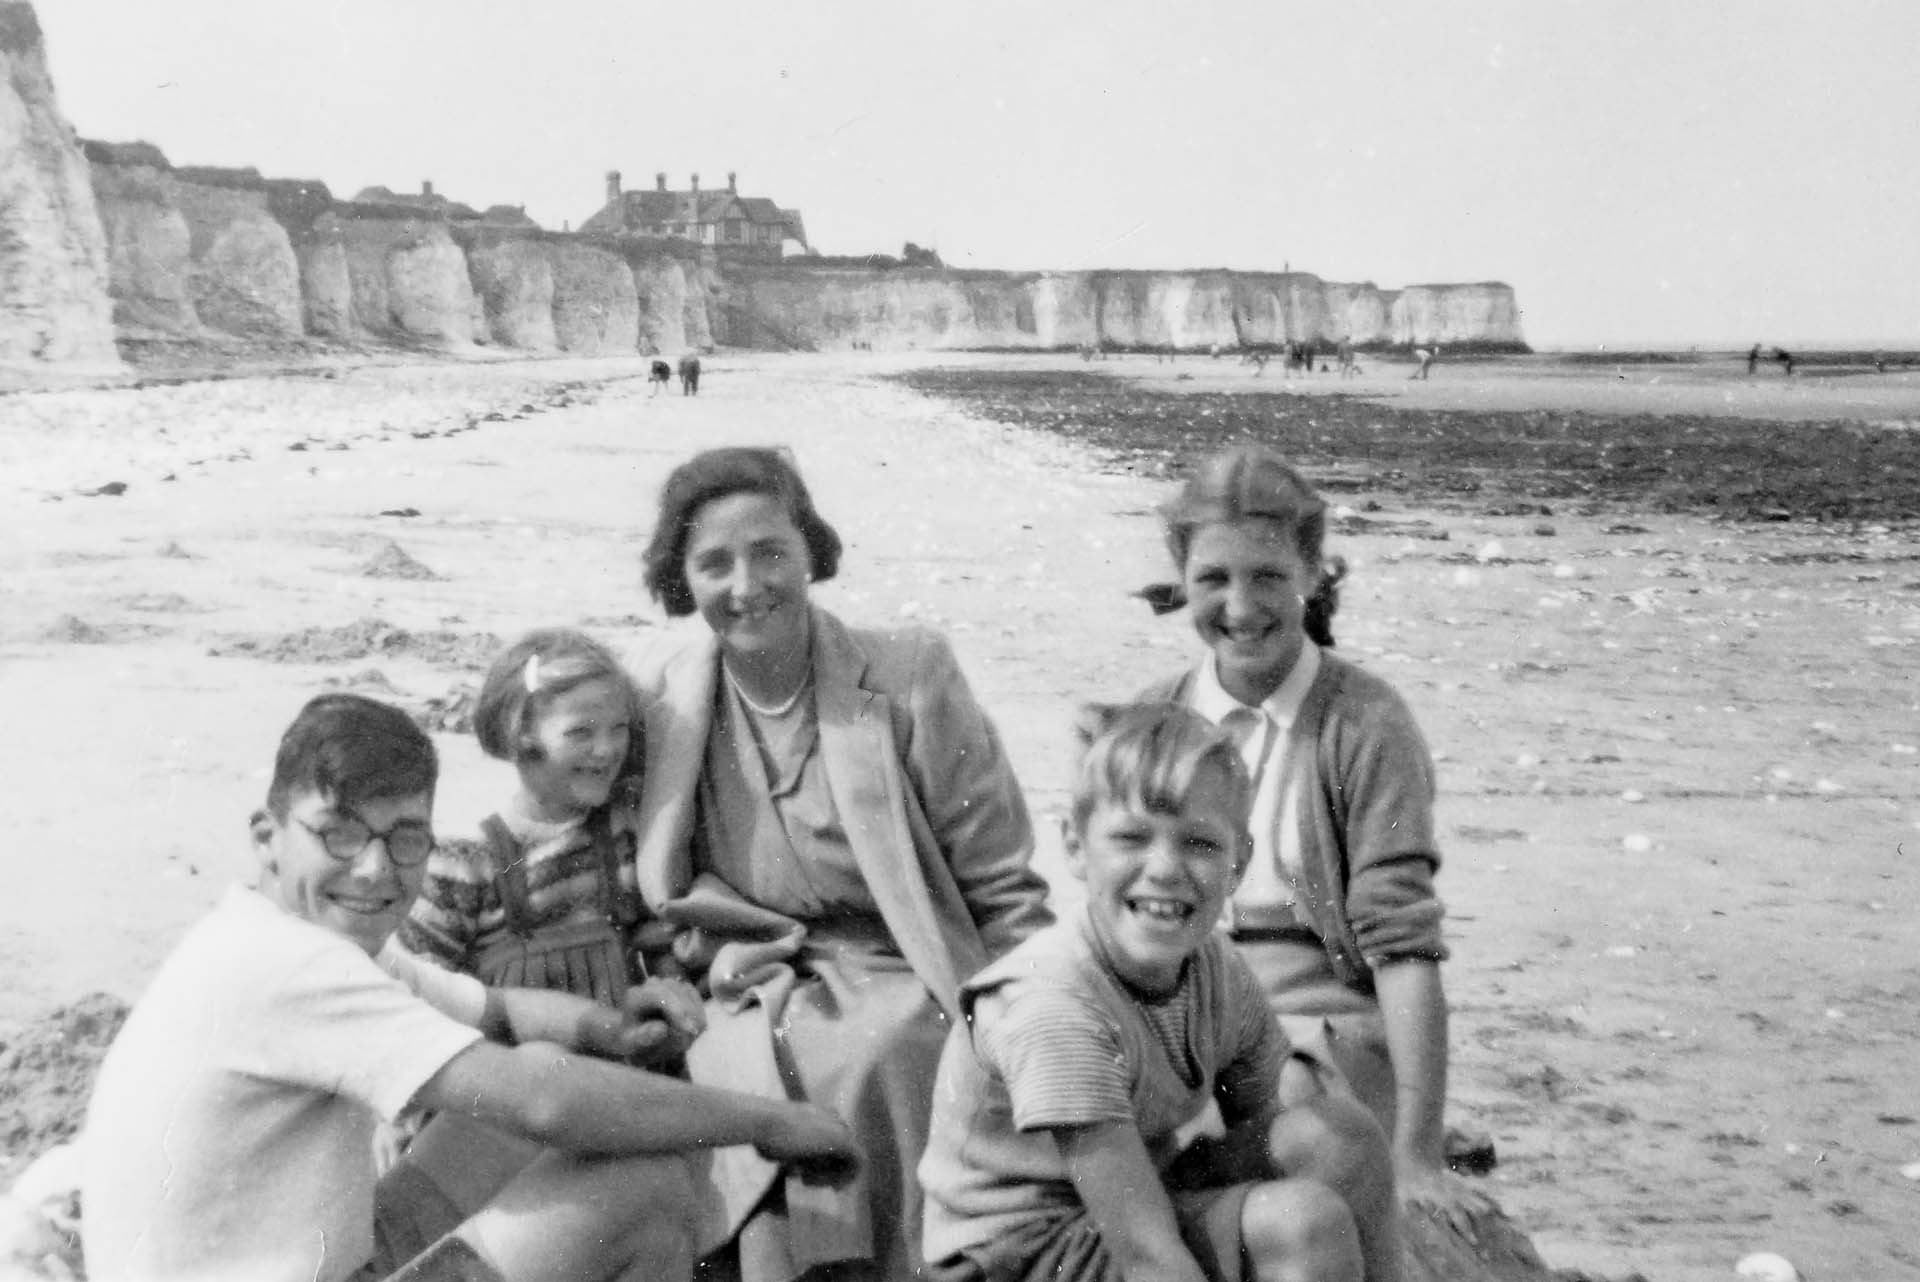 Kings on the beach 1950s Photoshoot voucher